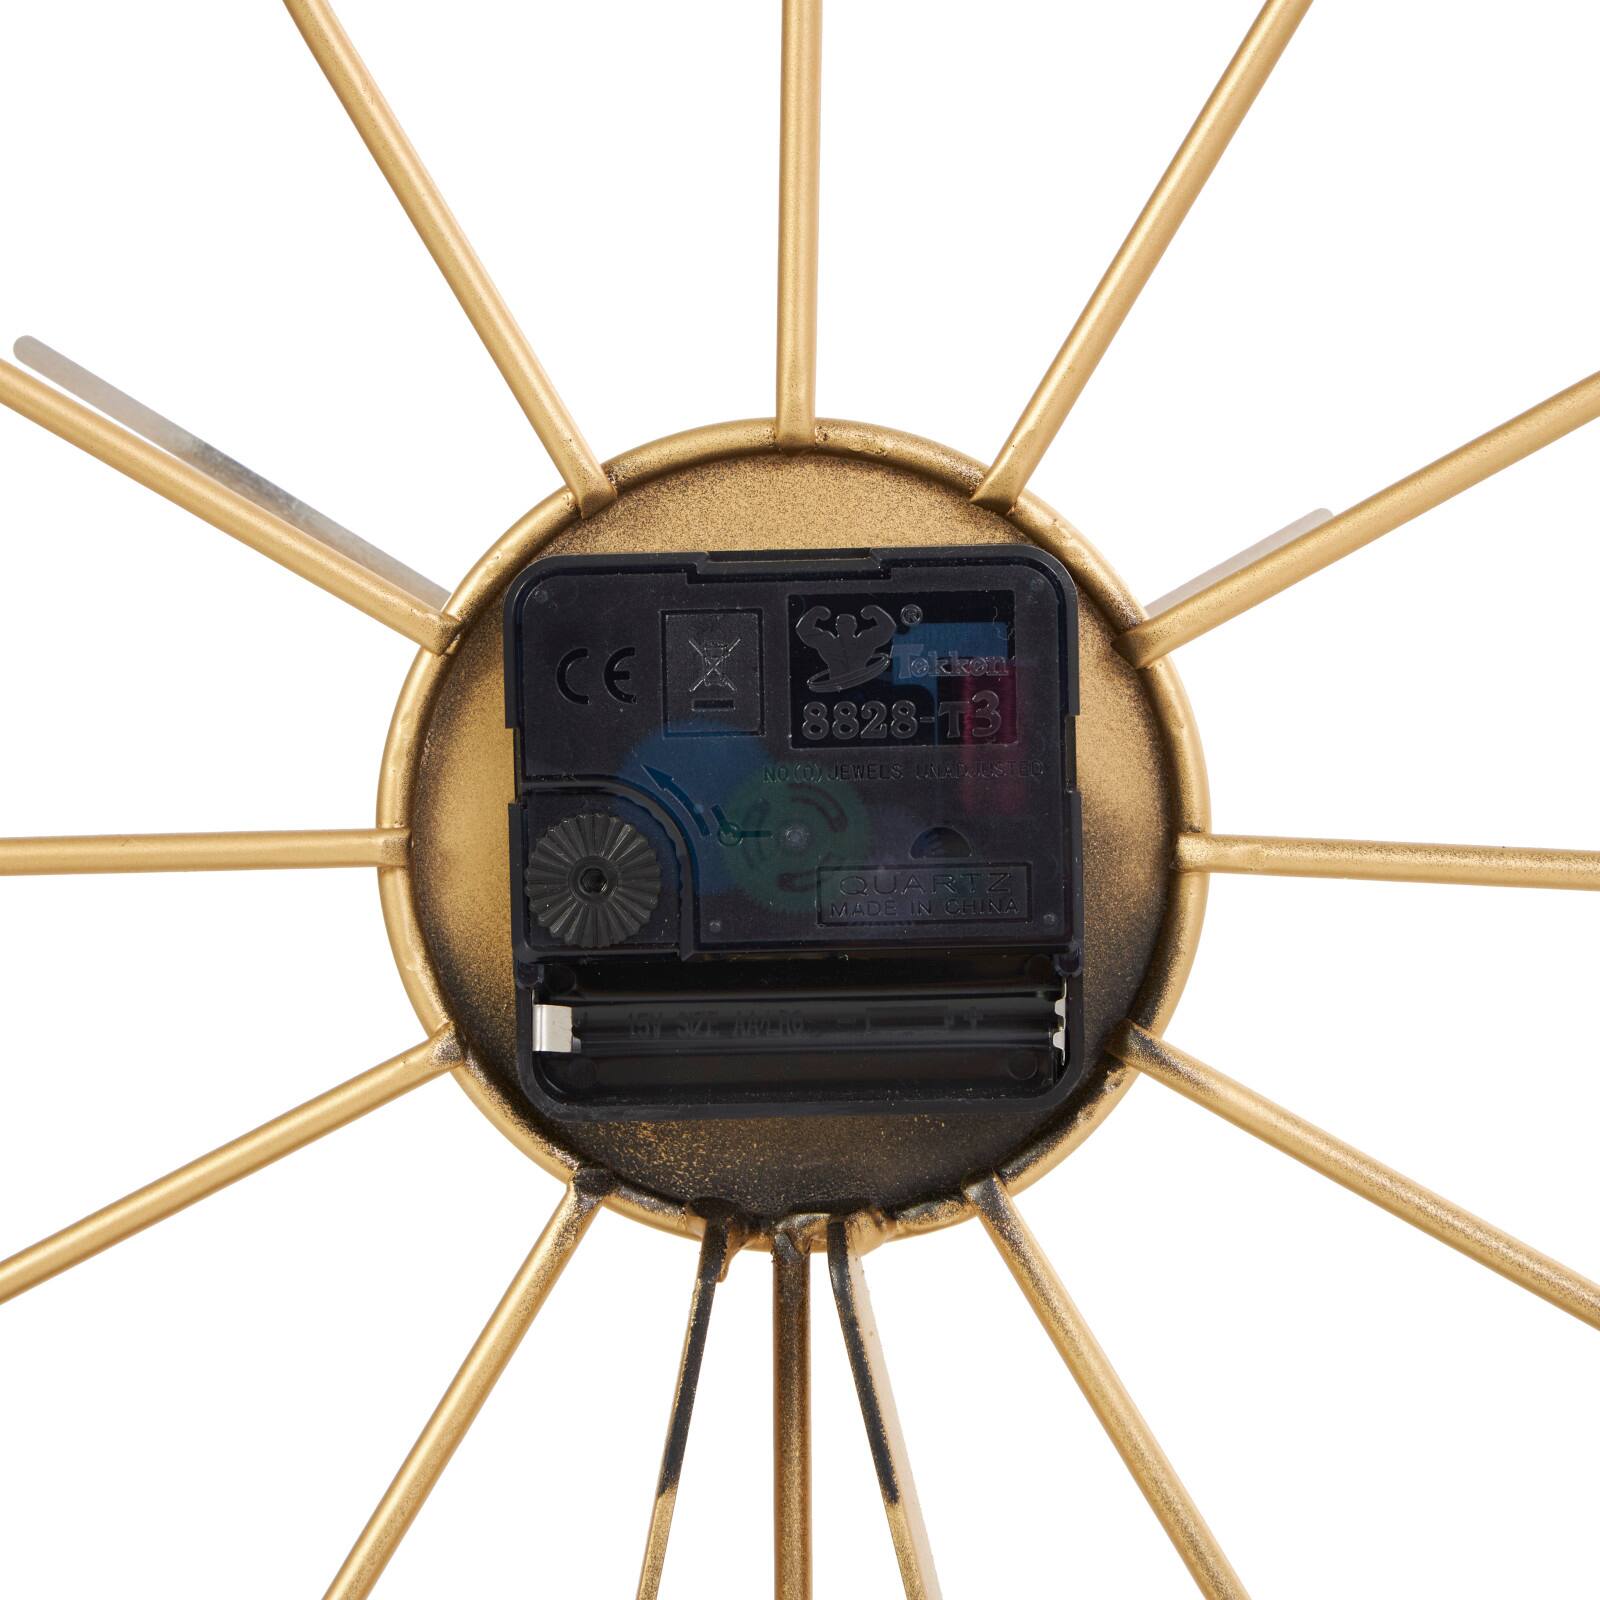 CosmoLiving by Cosmopolitan 12&#x22; Gold Metal Sunburst Clock with Black Base &#x26; Clockface